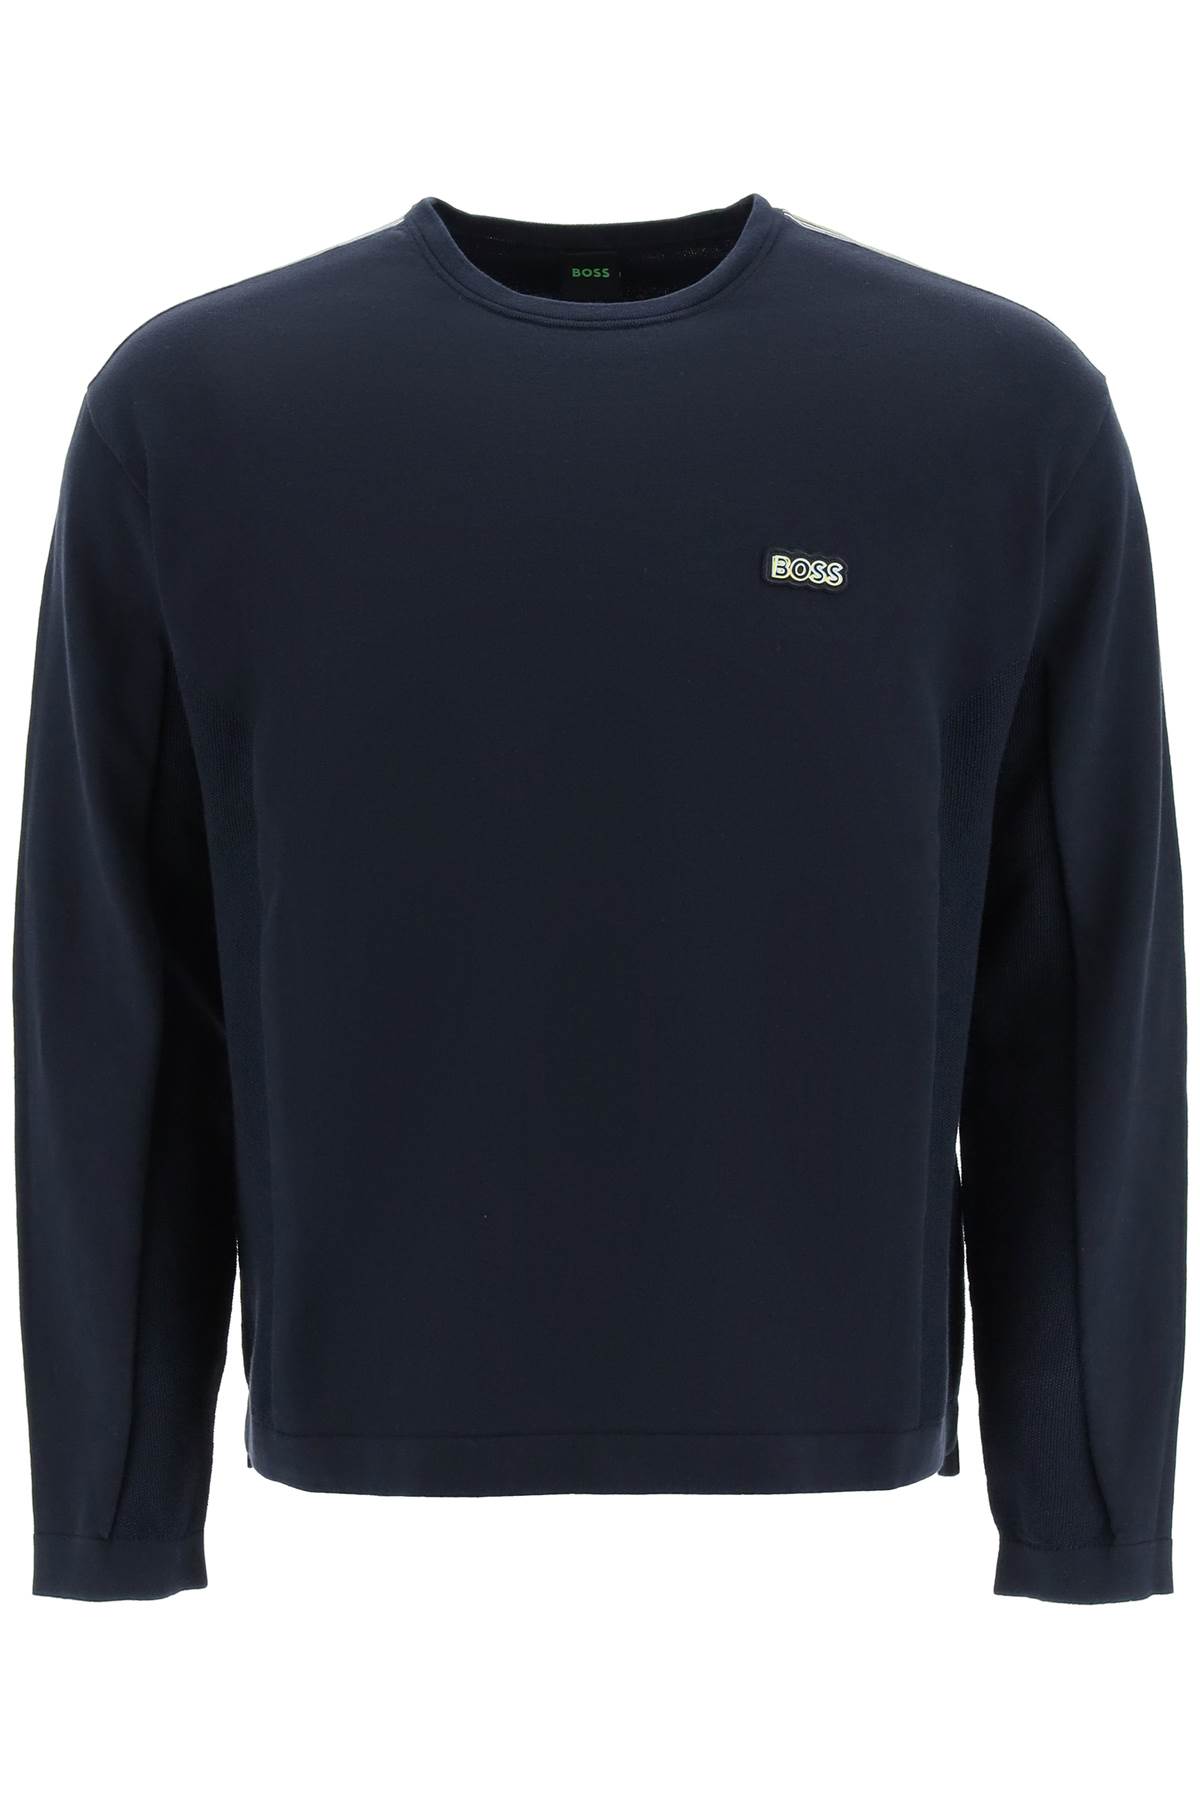 Hugo Boss Crewneck Sweatshirt With Knit Inserts